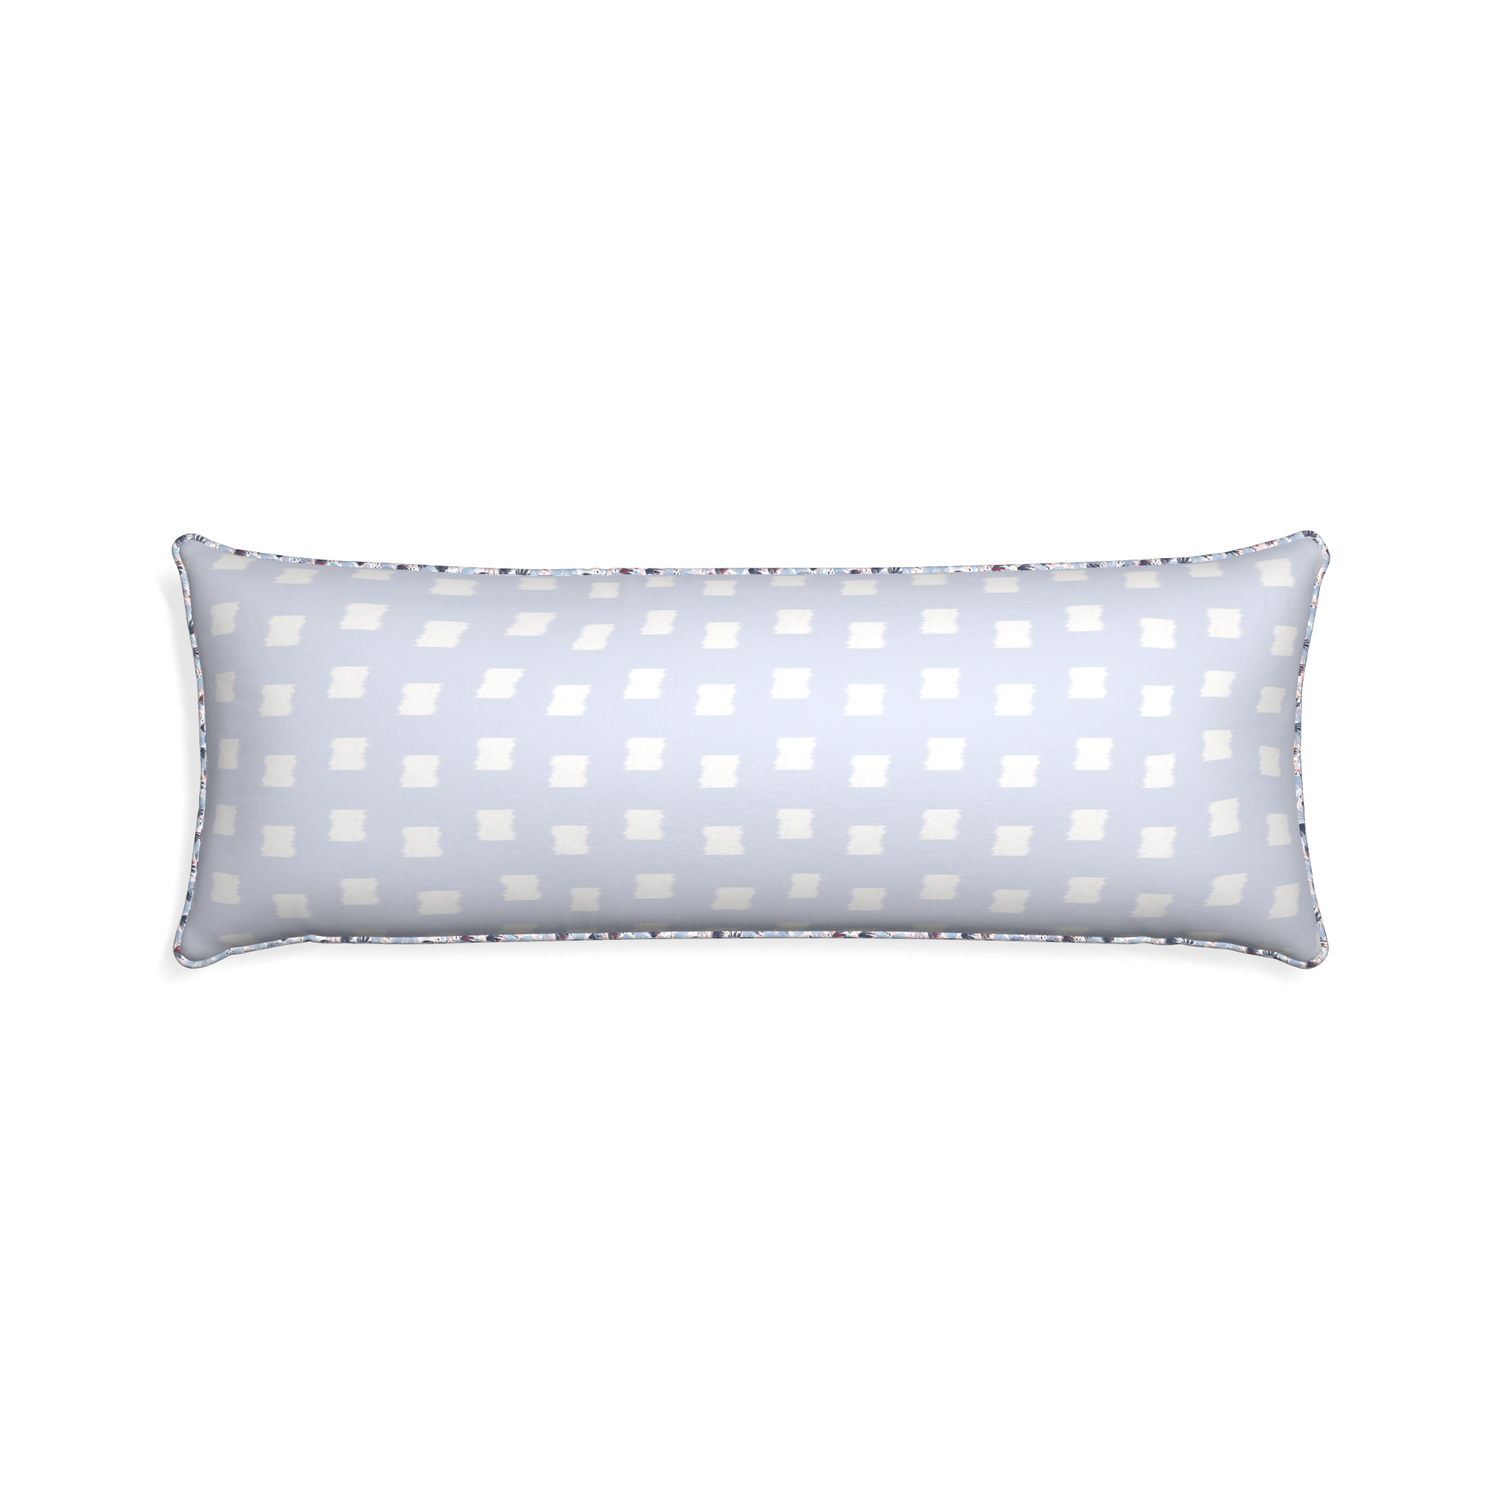 Xl-lumbar denton custom pillow with e piping on white background